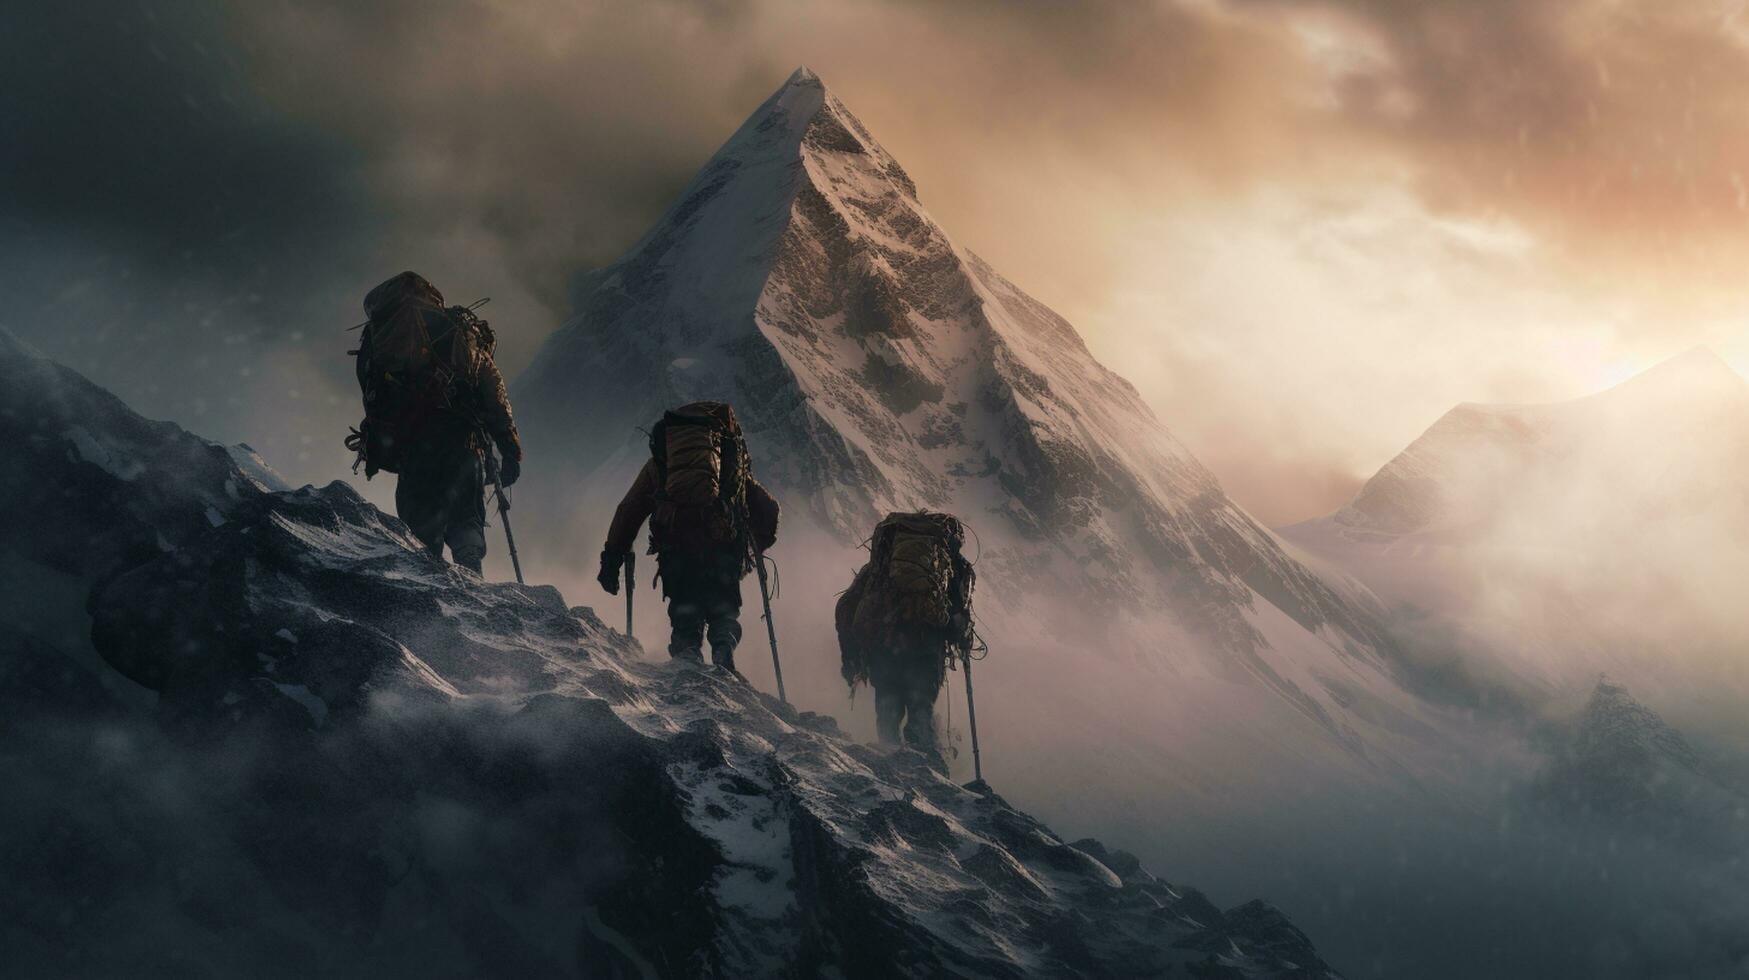 Mountain climber illustration background photo